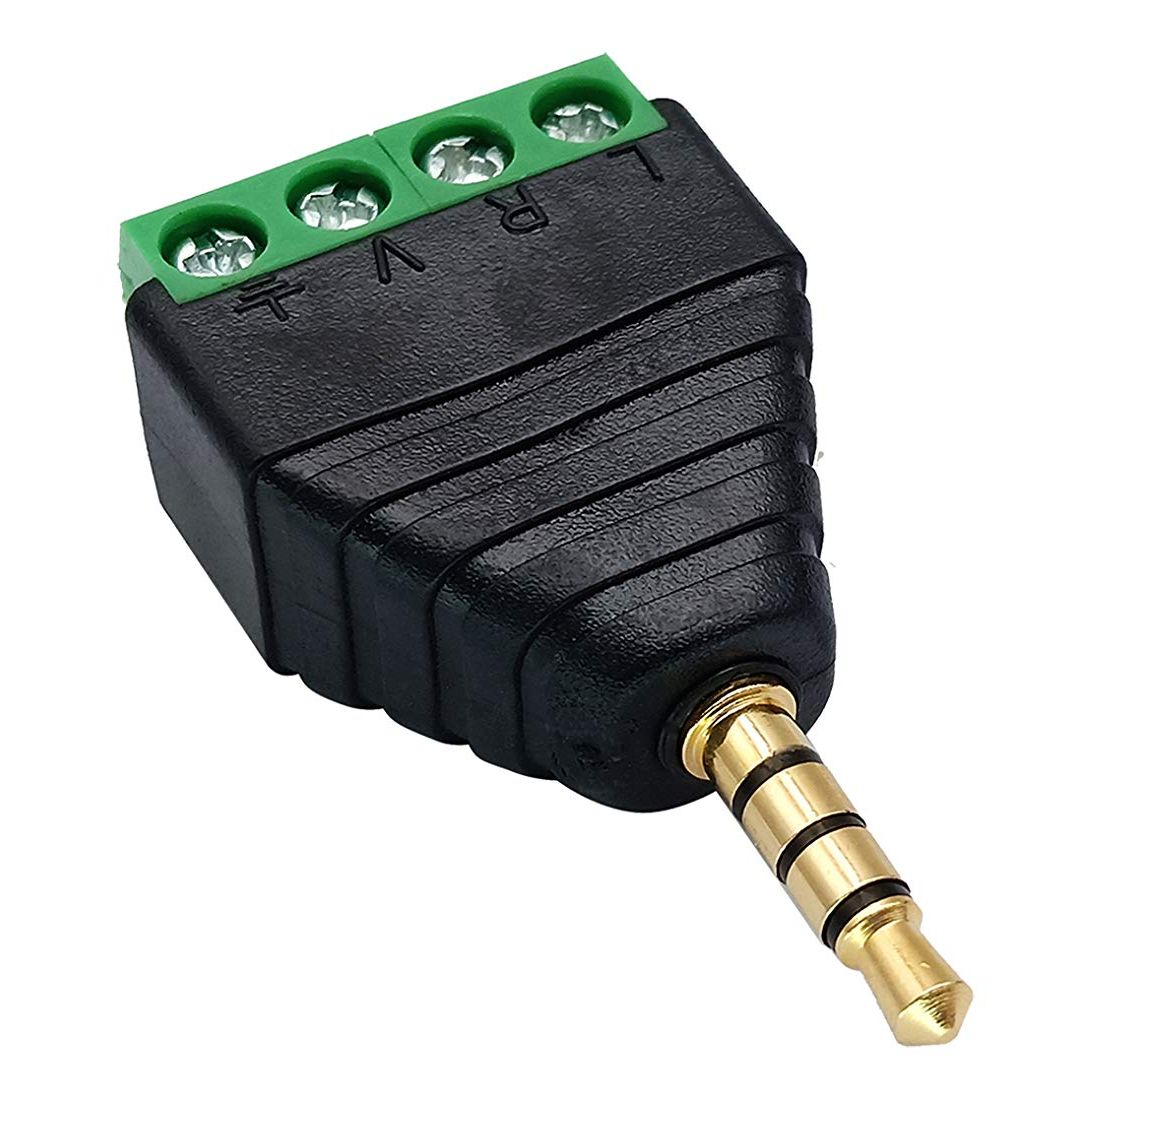 Jack connector 3.5mm 4-polig male zwart met schroefterminals